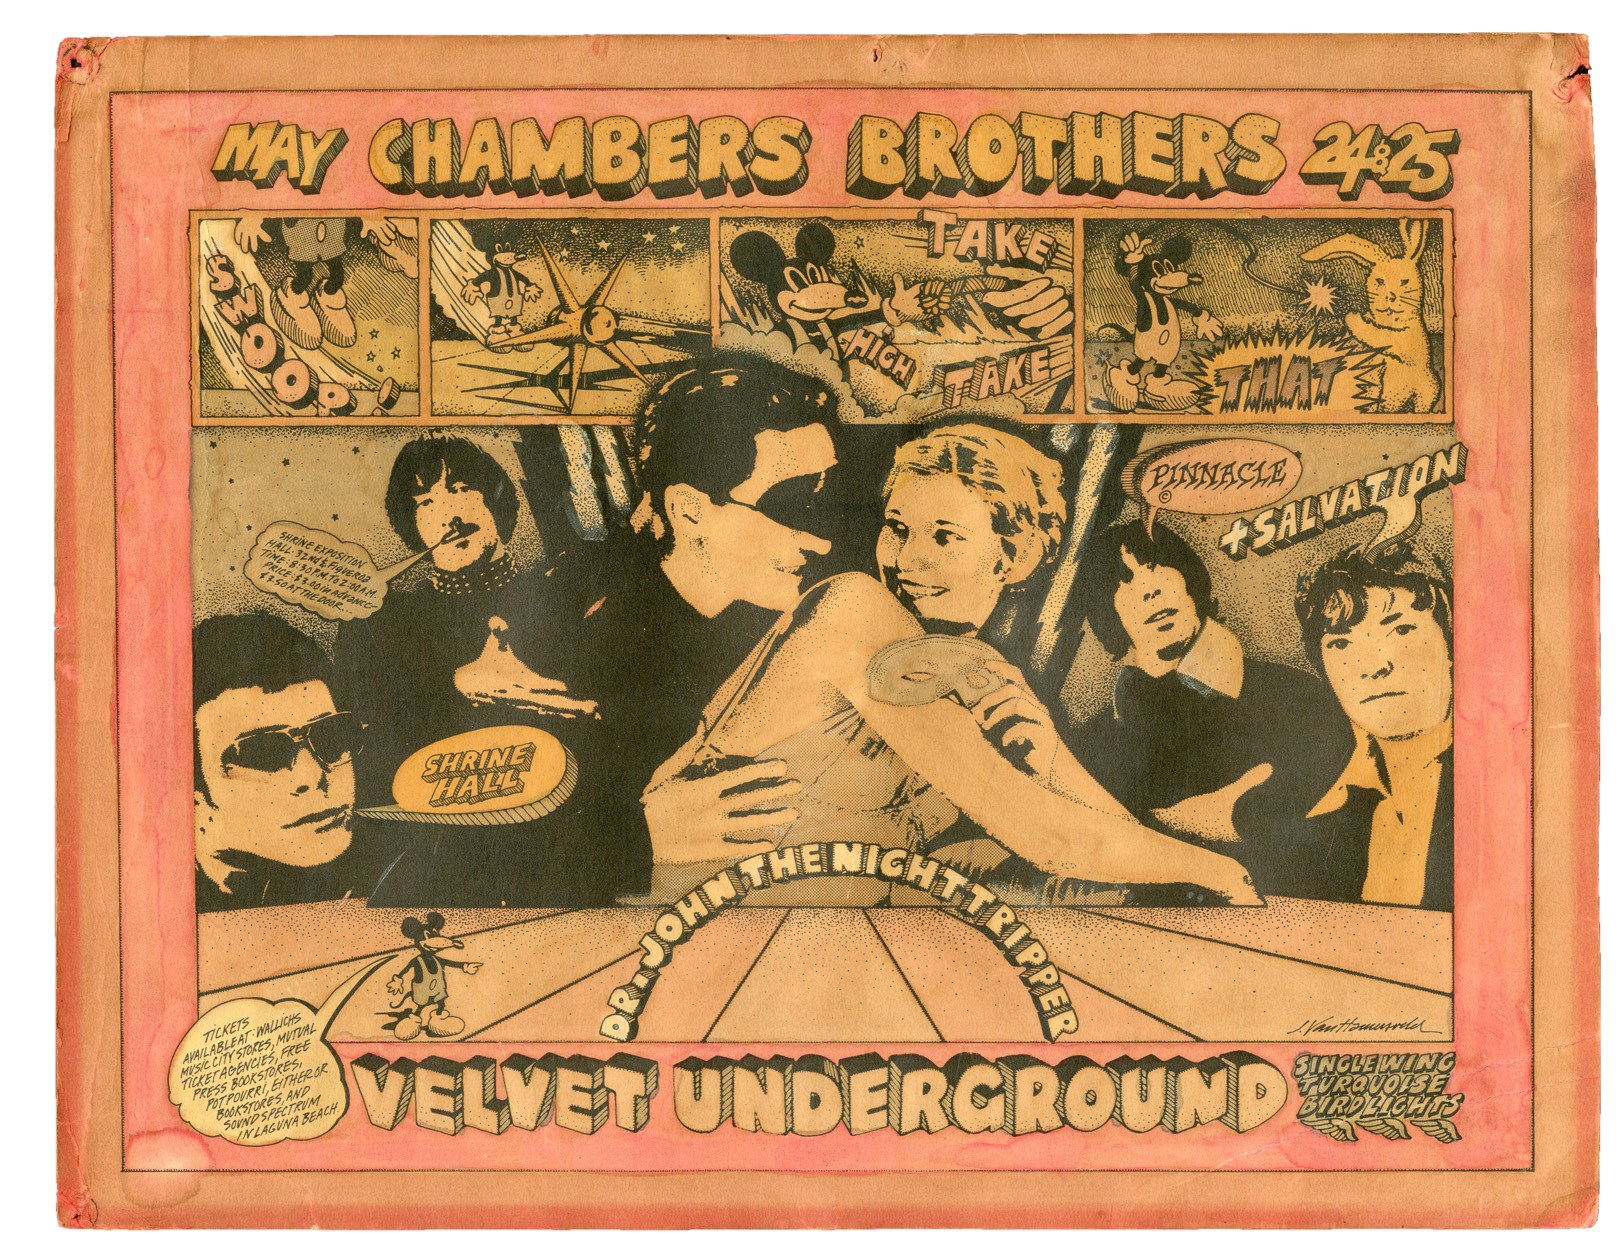 - 1968 Velvet Underground Poster by J. Van Hamersveld - Only Known Colored Version